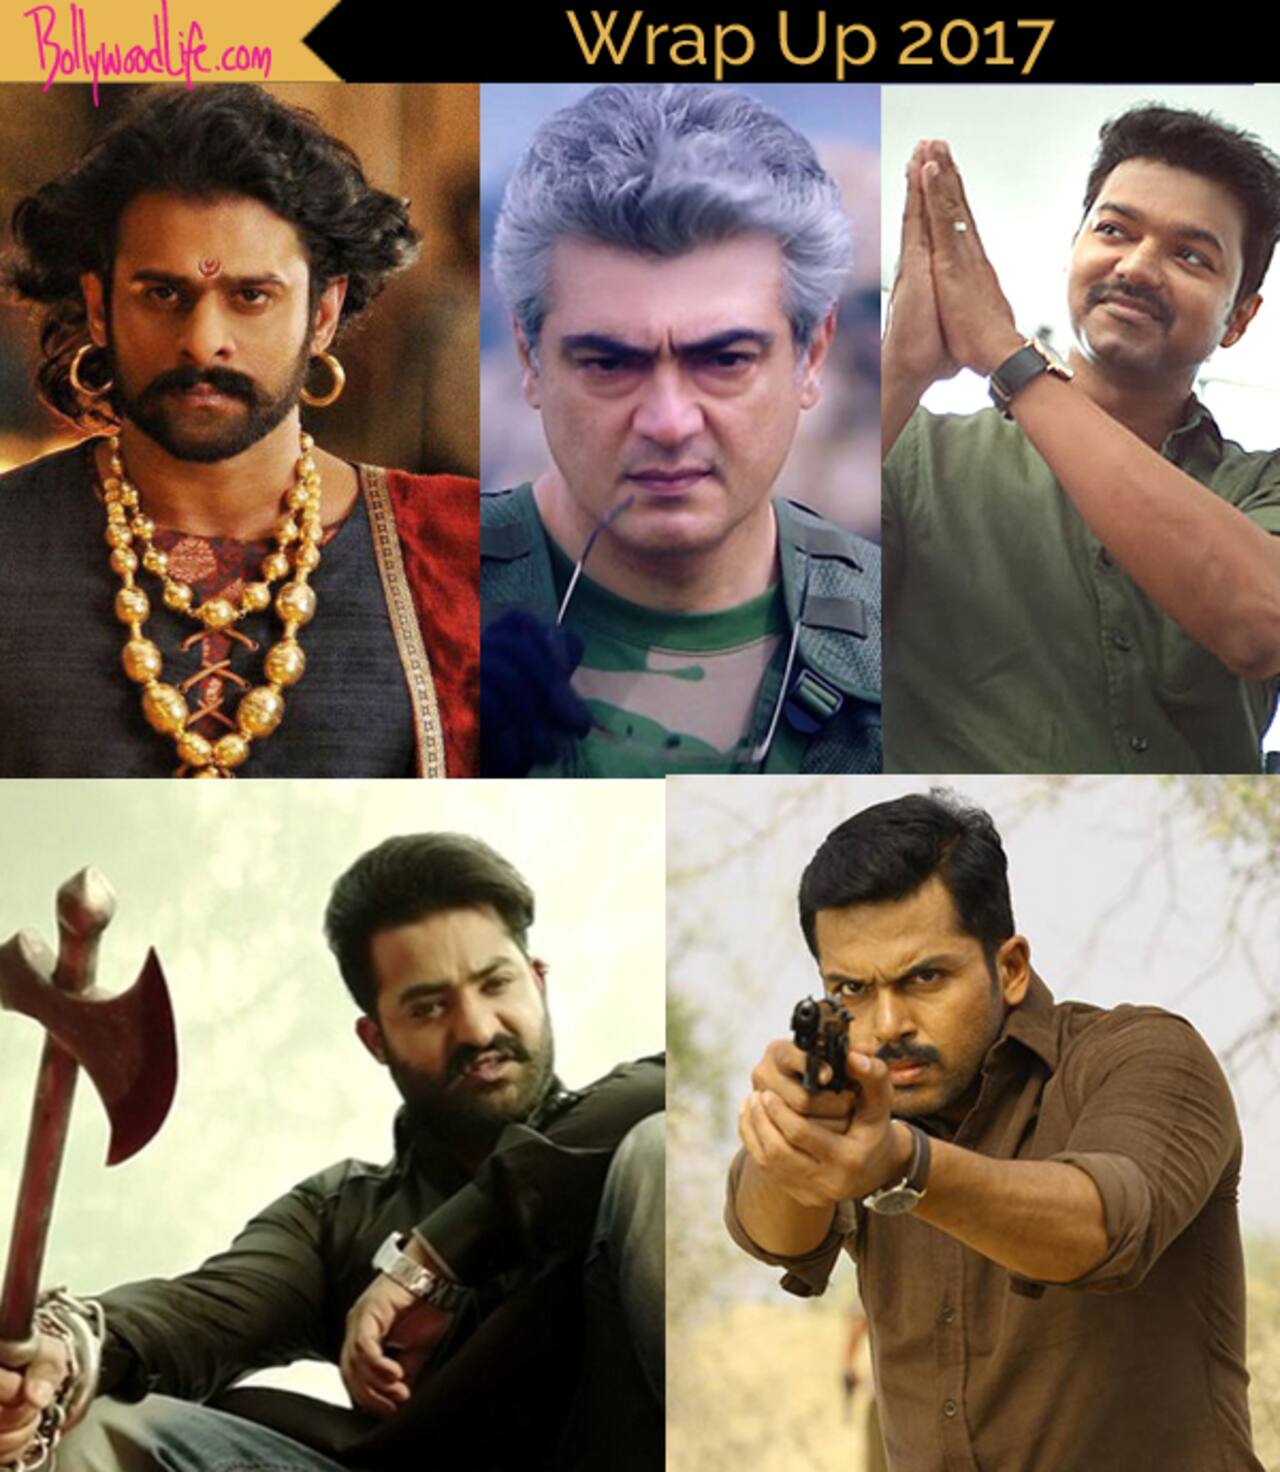 Prabhas, Ajith Kumar, Thalapathy Vijay, Jr NTR, Karthi  - Who is the best South actor of 2017?